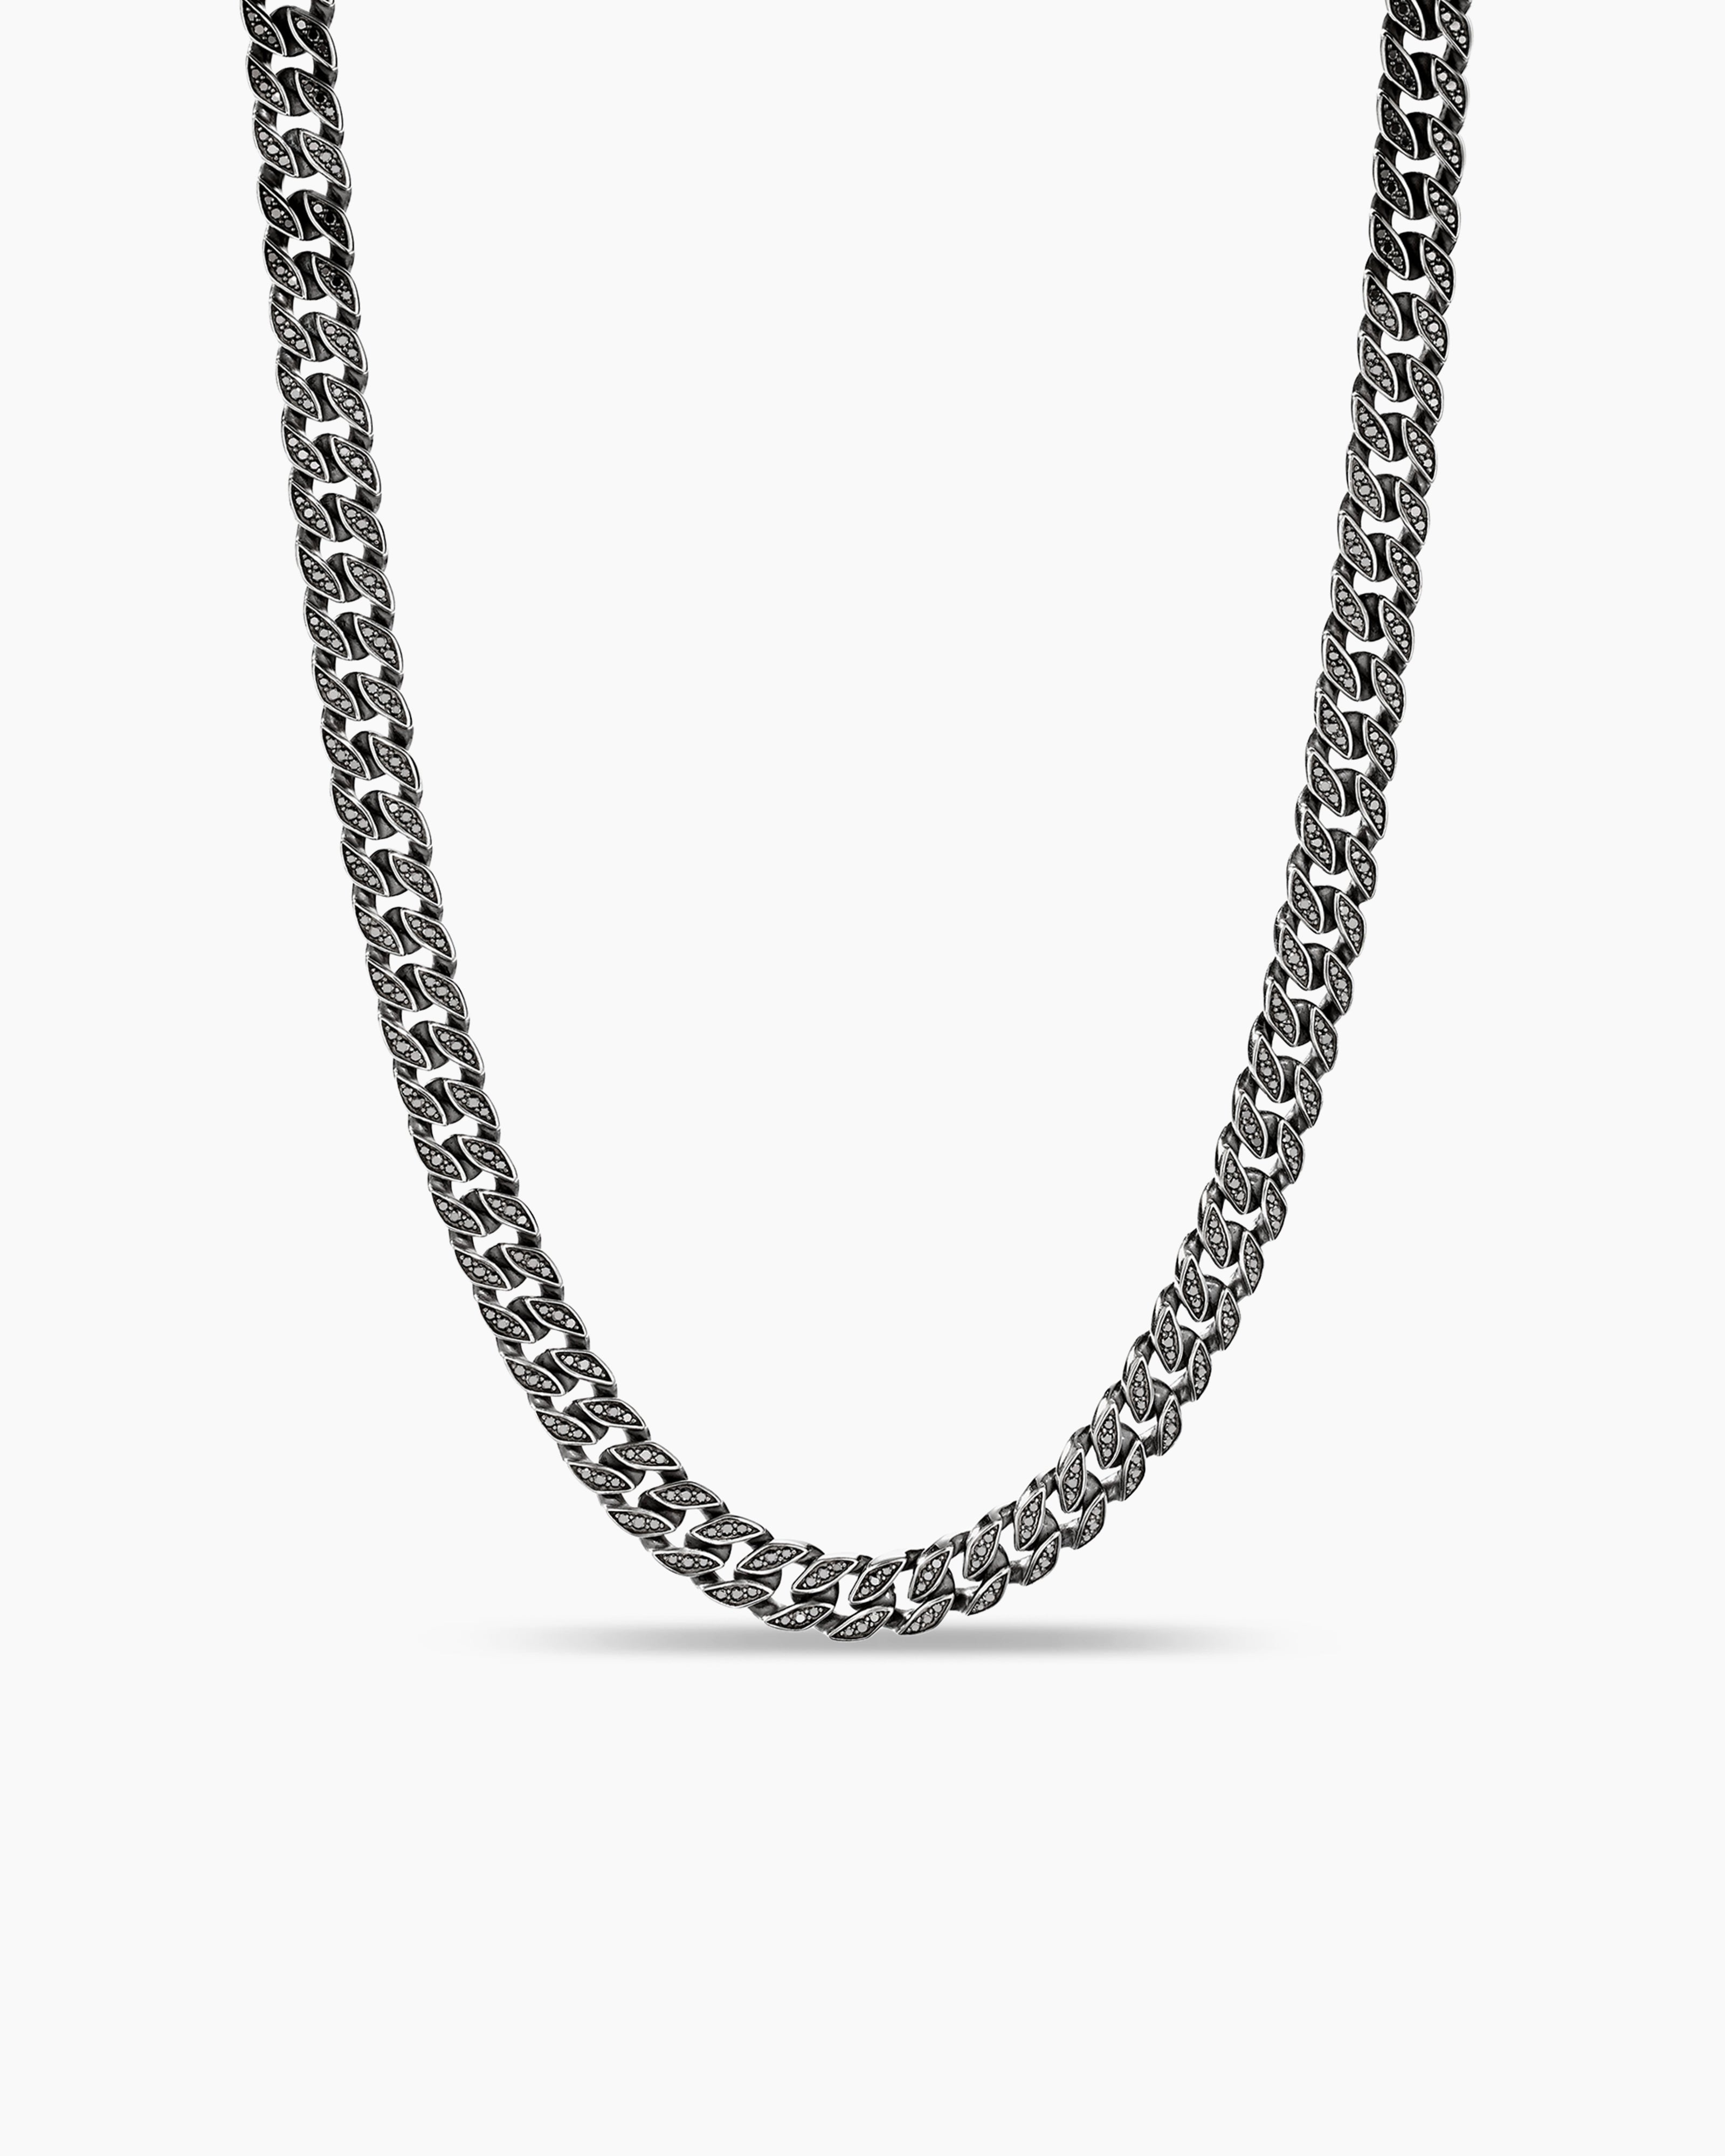 David Yurman Men's Curb Chain Necklace with Pavé Black Diamonds - Sterling Silver - Size 22